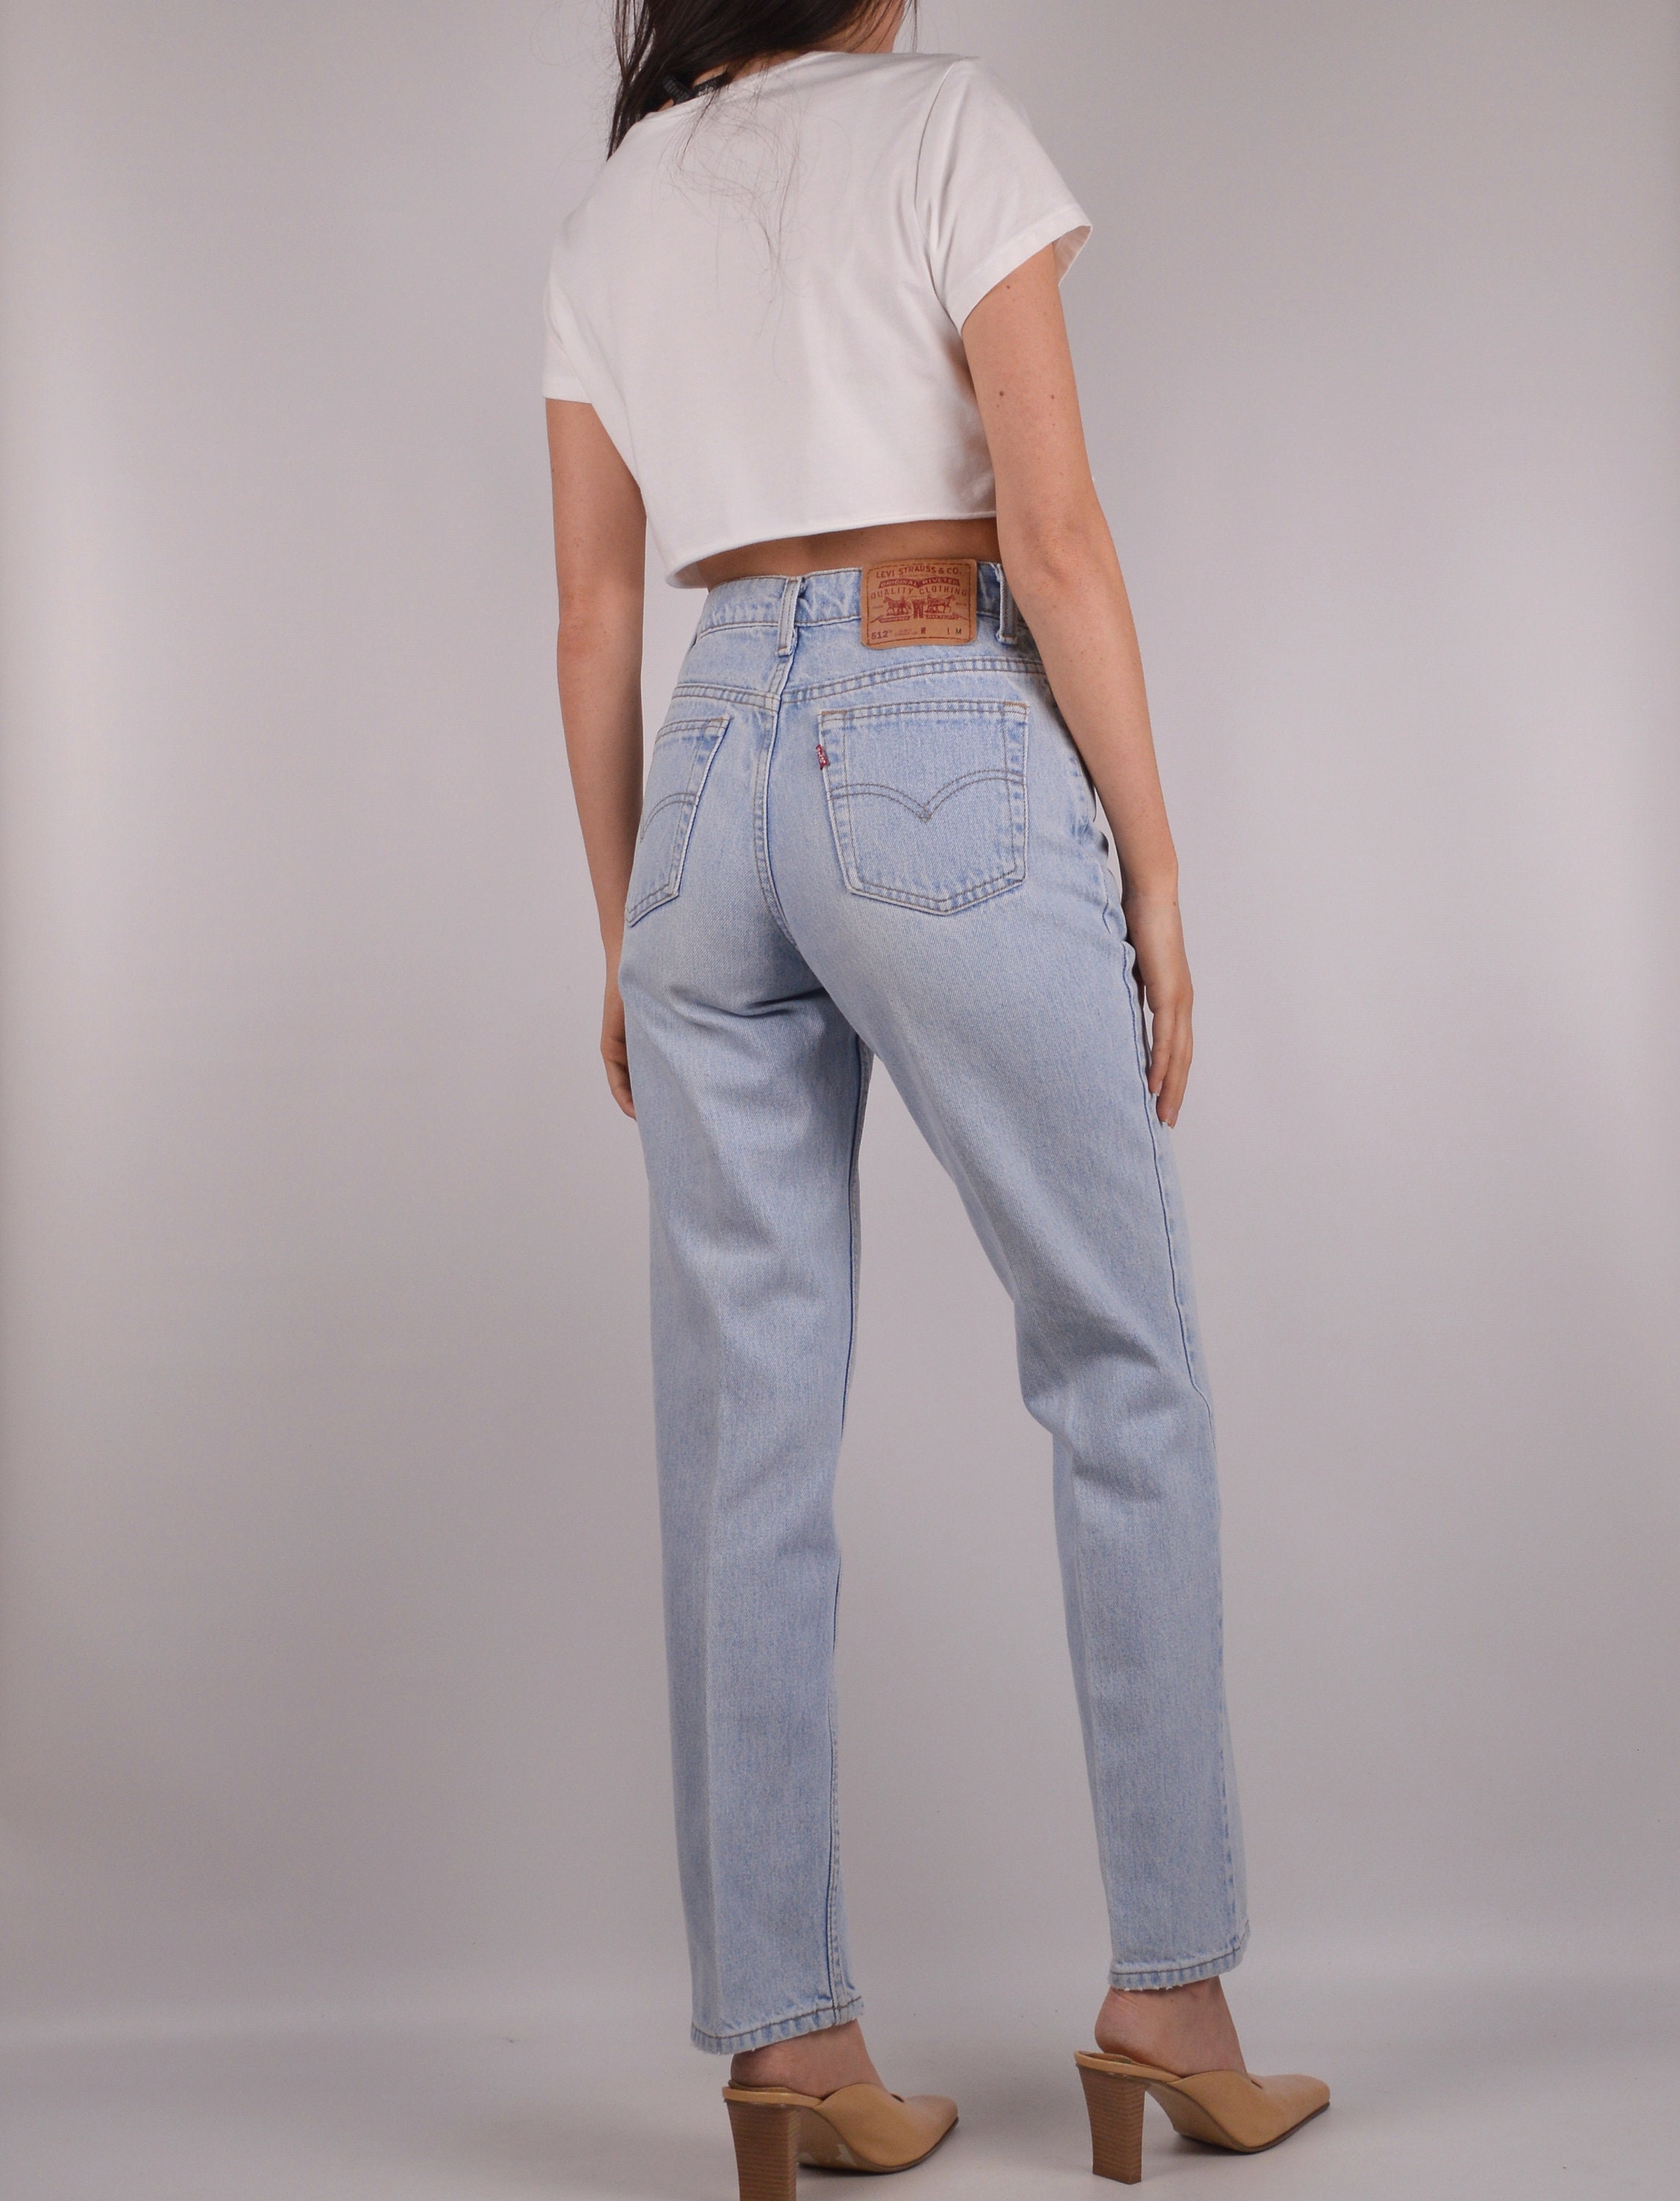 15% off SALE Vintage LEVI'S 512 Slim Jeans / 26.5W